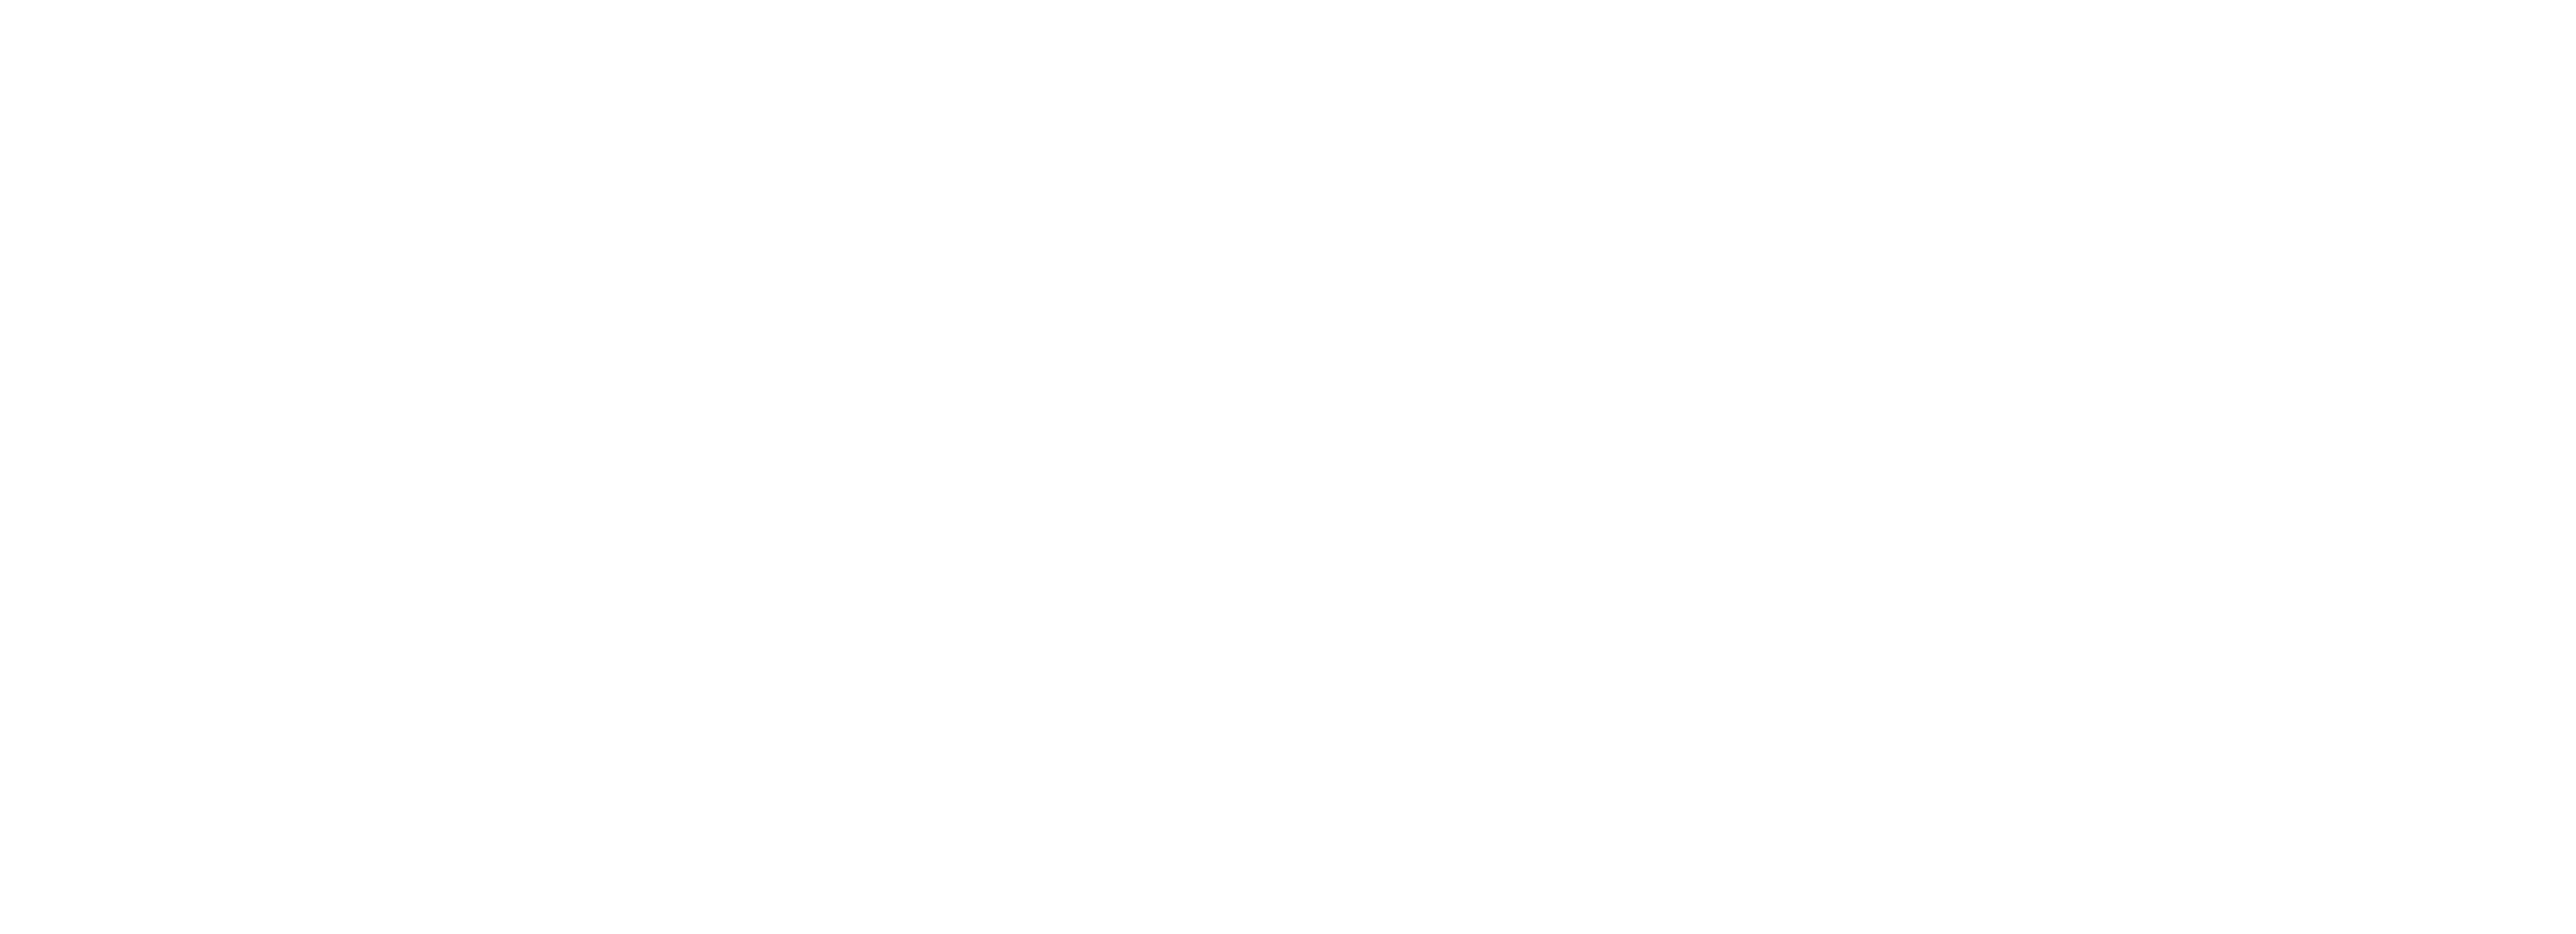 Libya Design